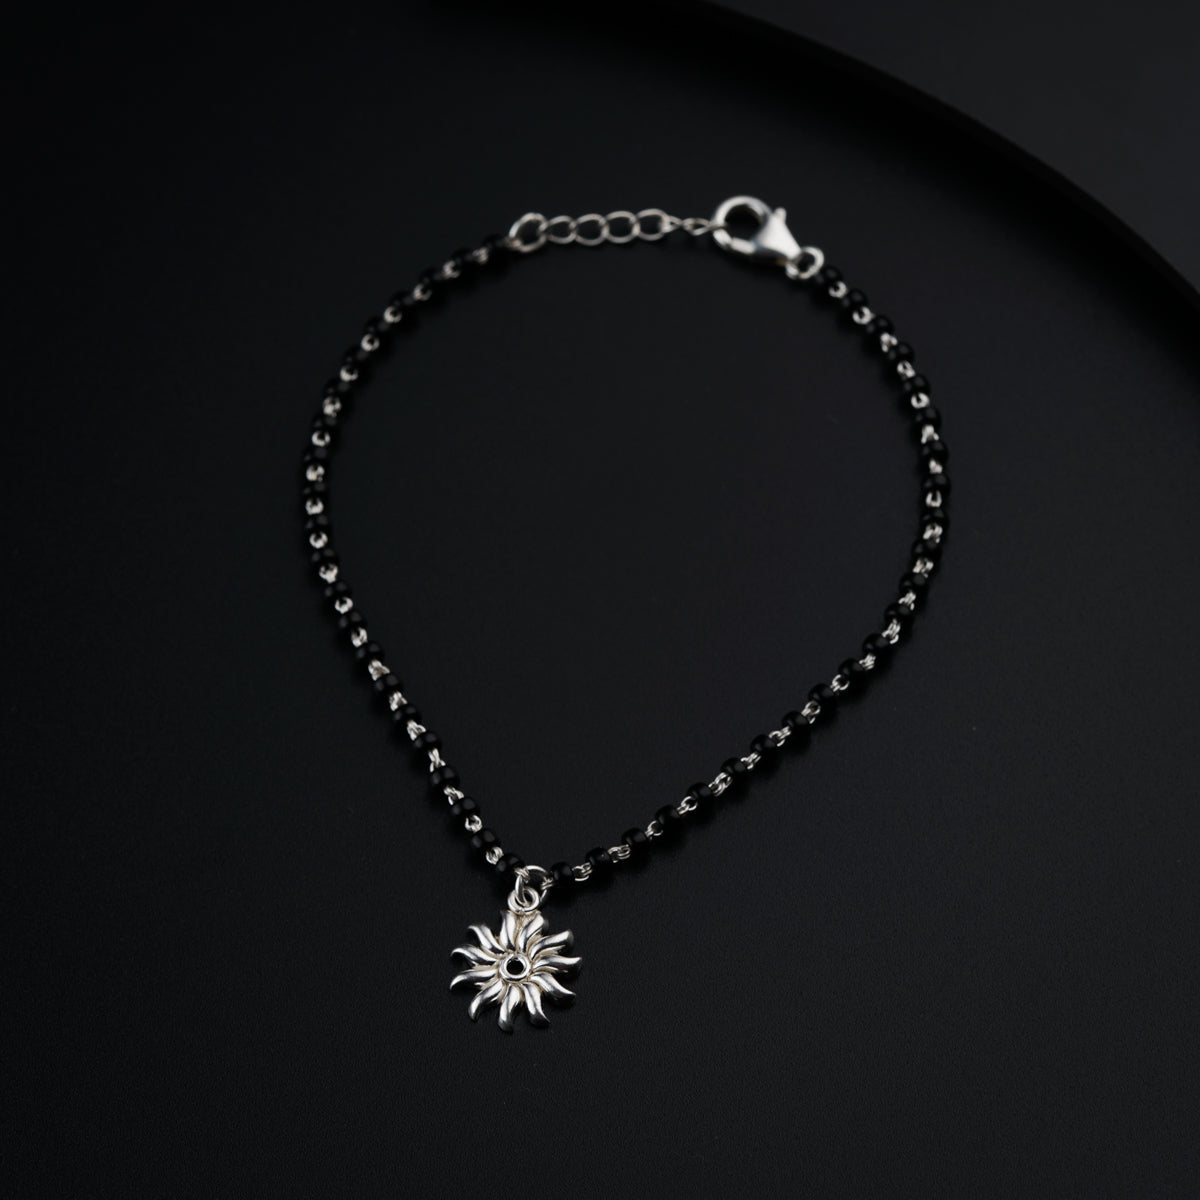 a black beaded bracelet with a silver star charm